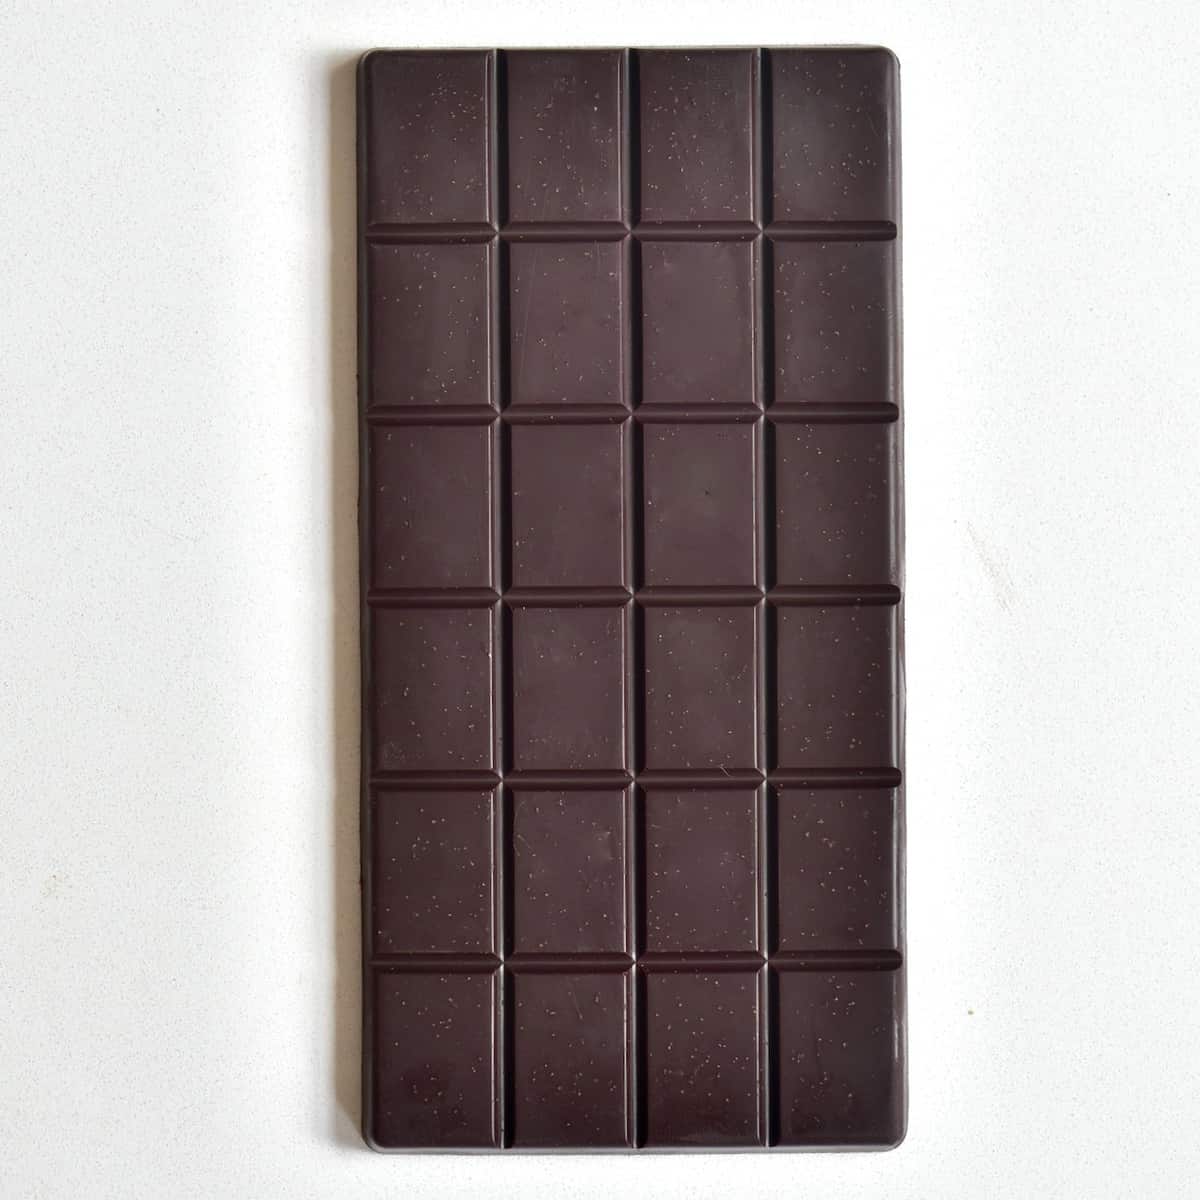 Dark | 1 Dark Chocolate Bar